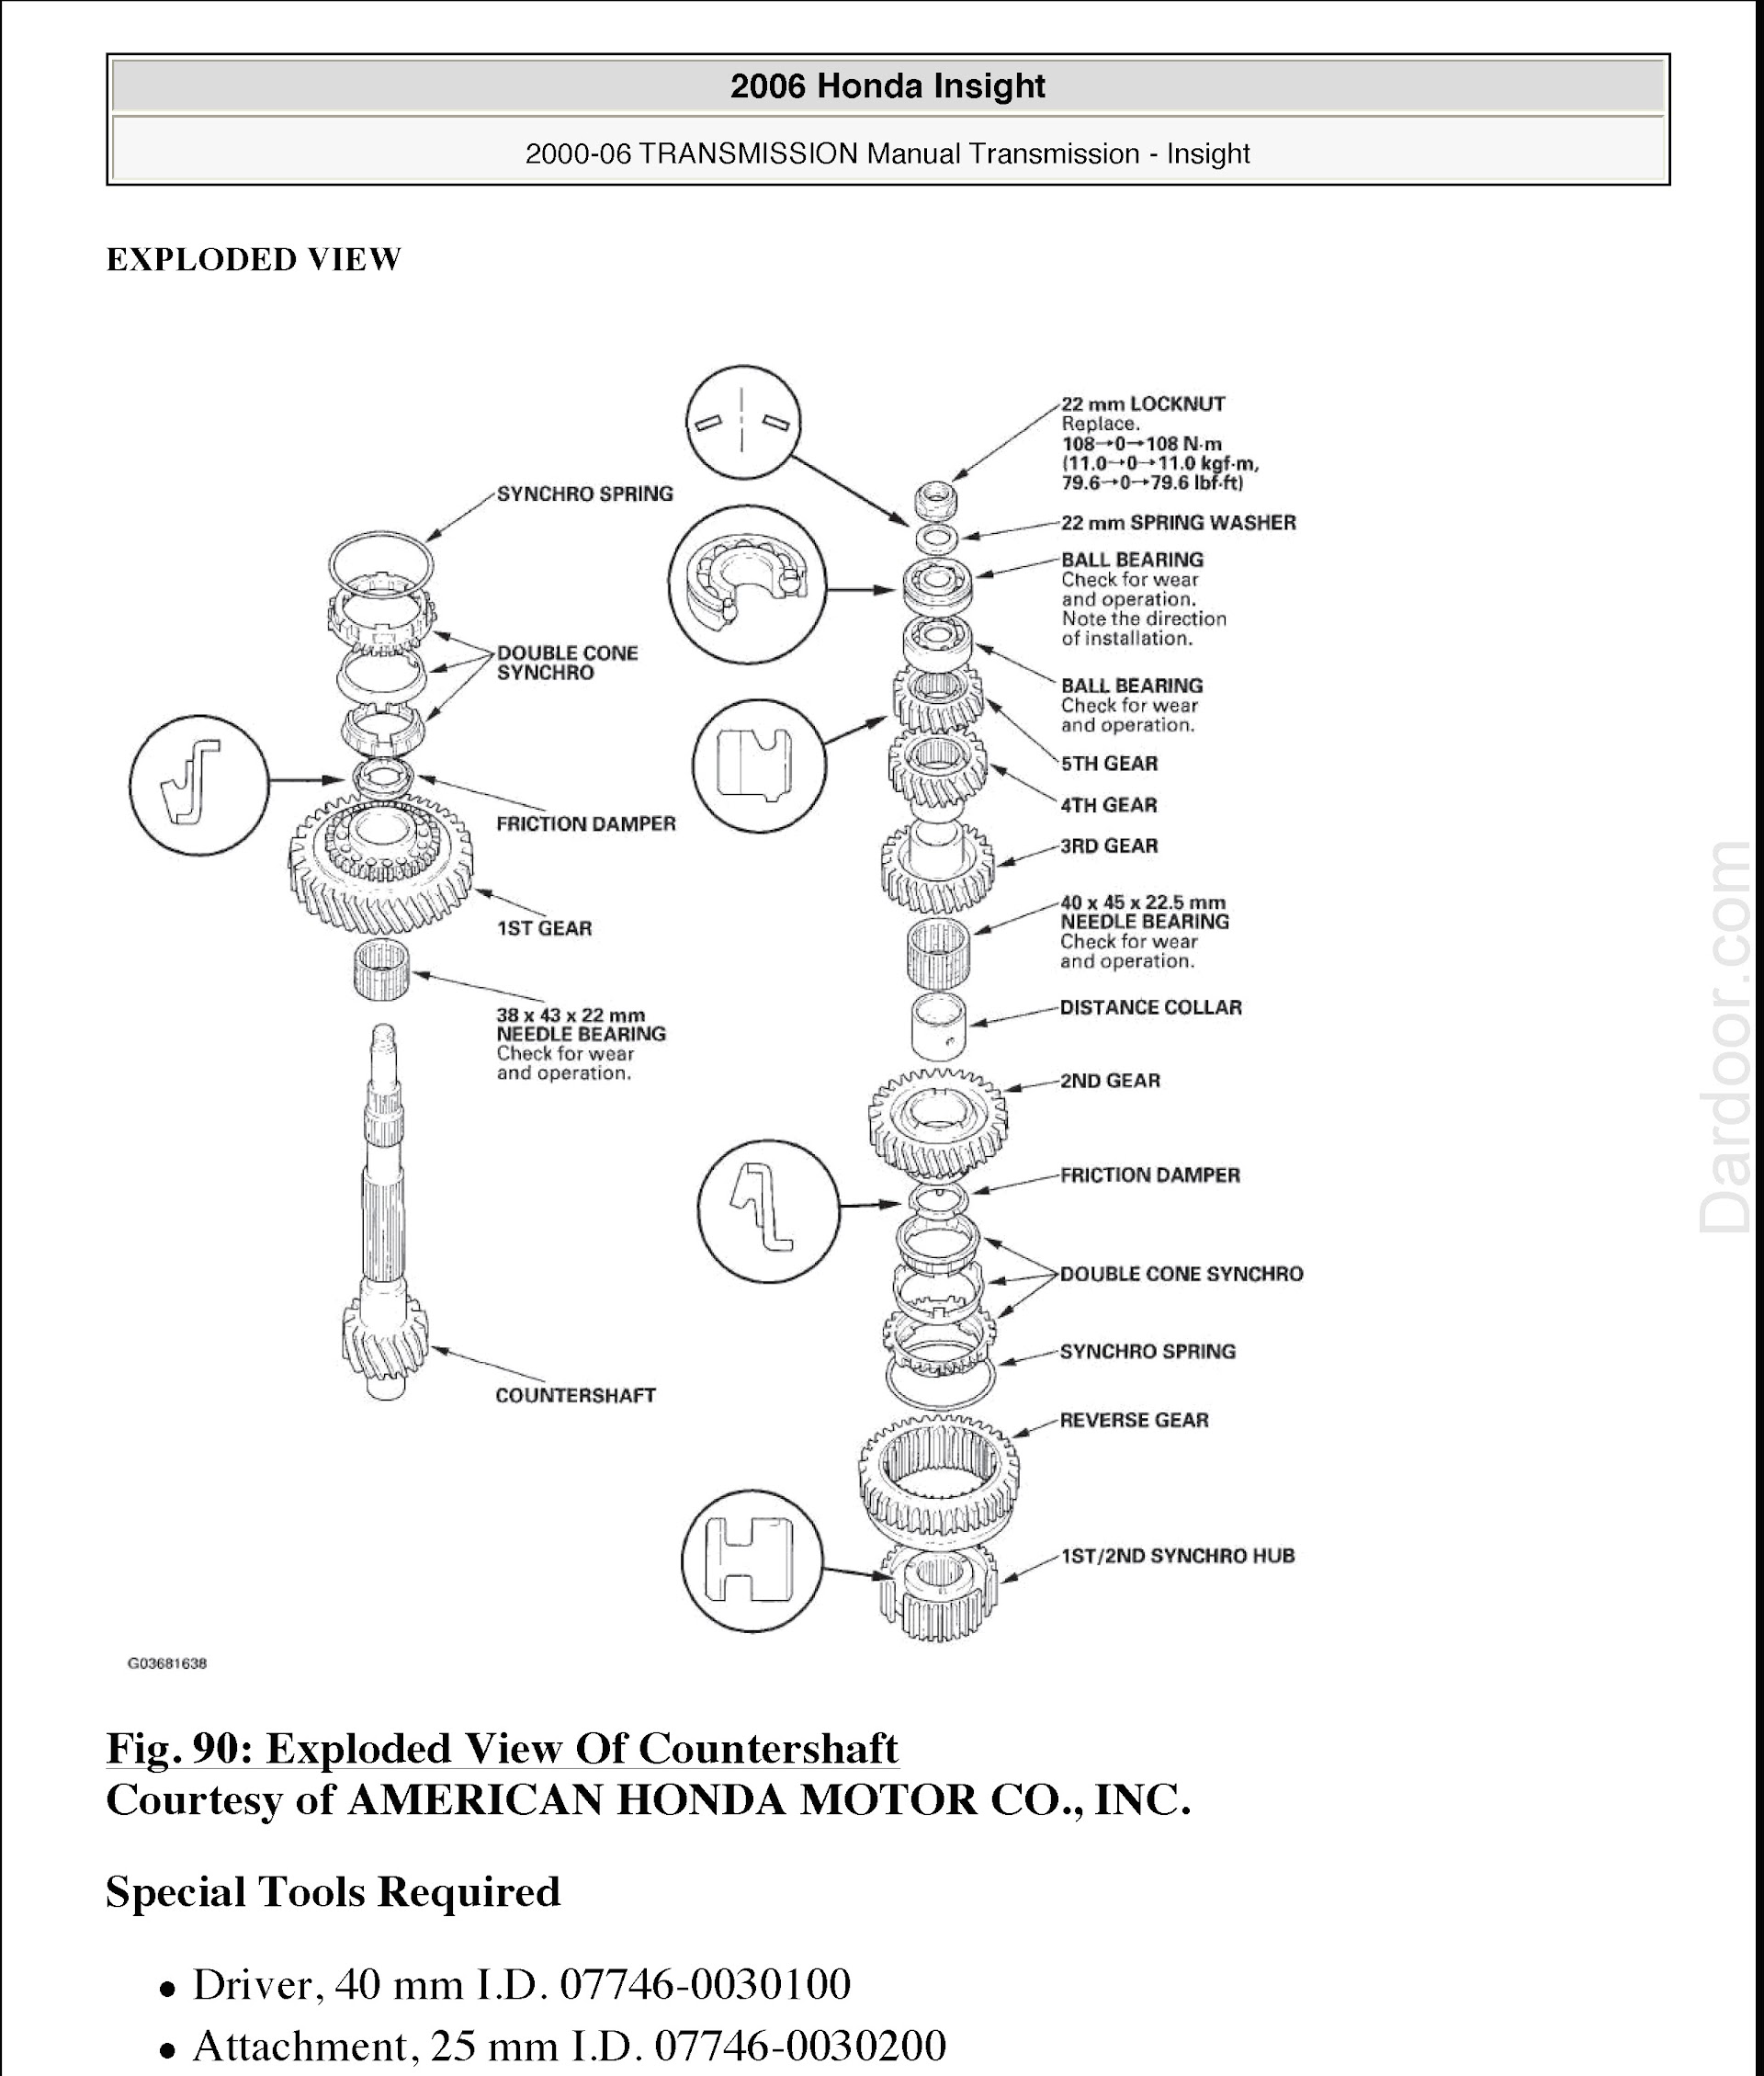 2000-2006 Honda Insight Repair Manual, transmission manual